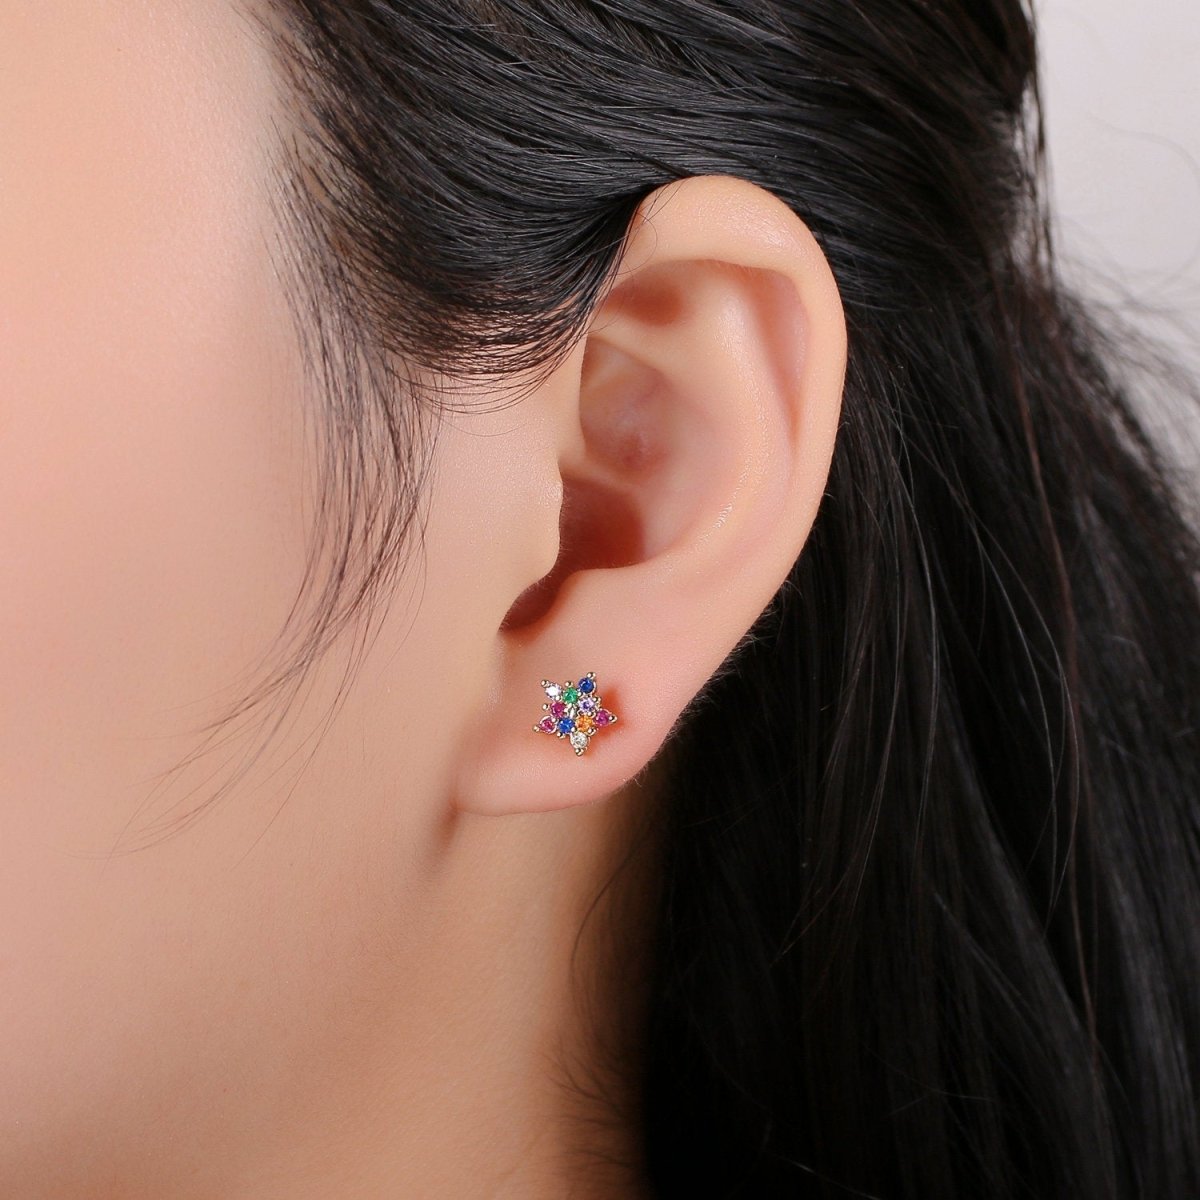 Star stud earrings Gold Multi Color Cz earrings, dainty Earring studs, tiny studs gold, tiny earrings, Multi Color studs Q-255 - DLUXCA